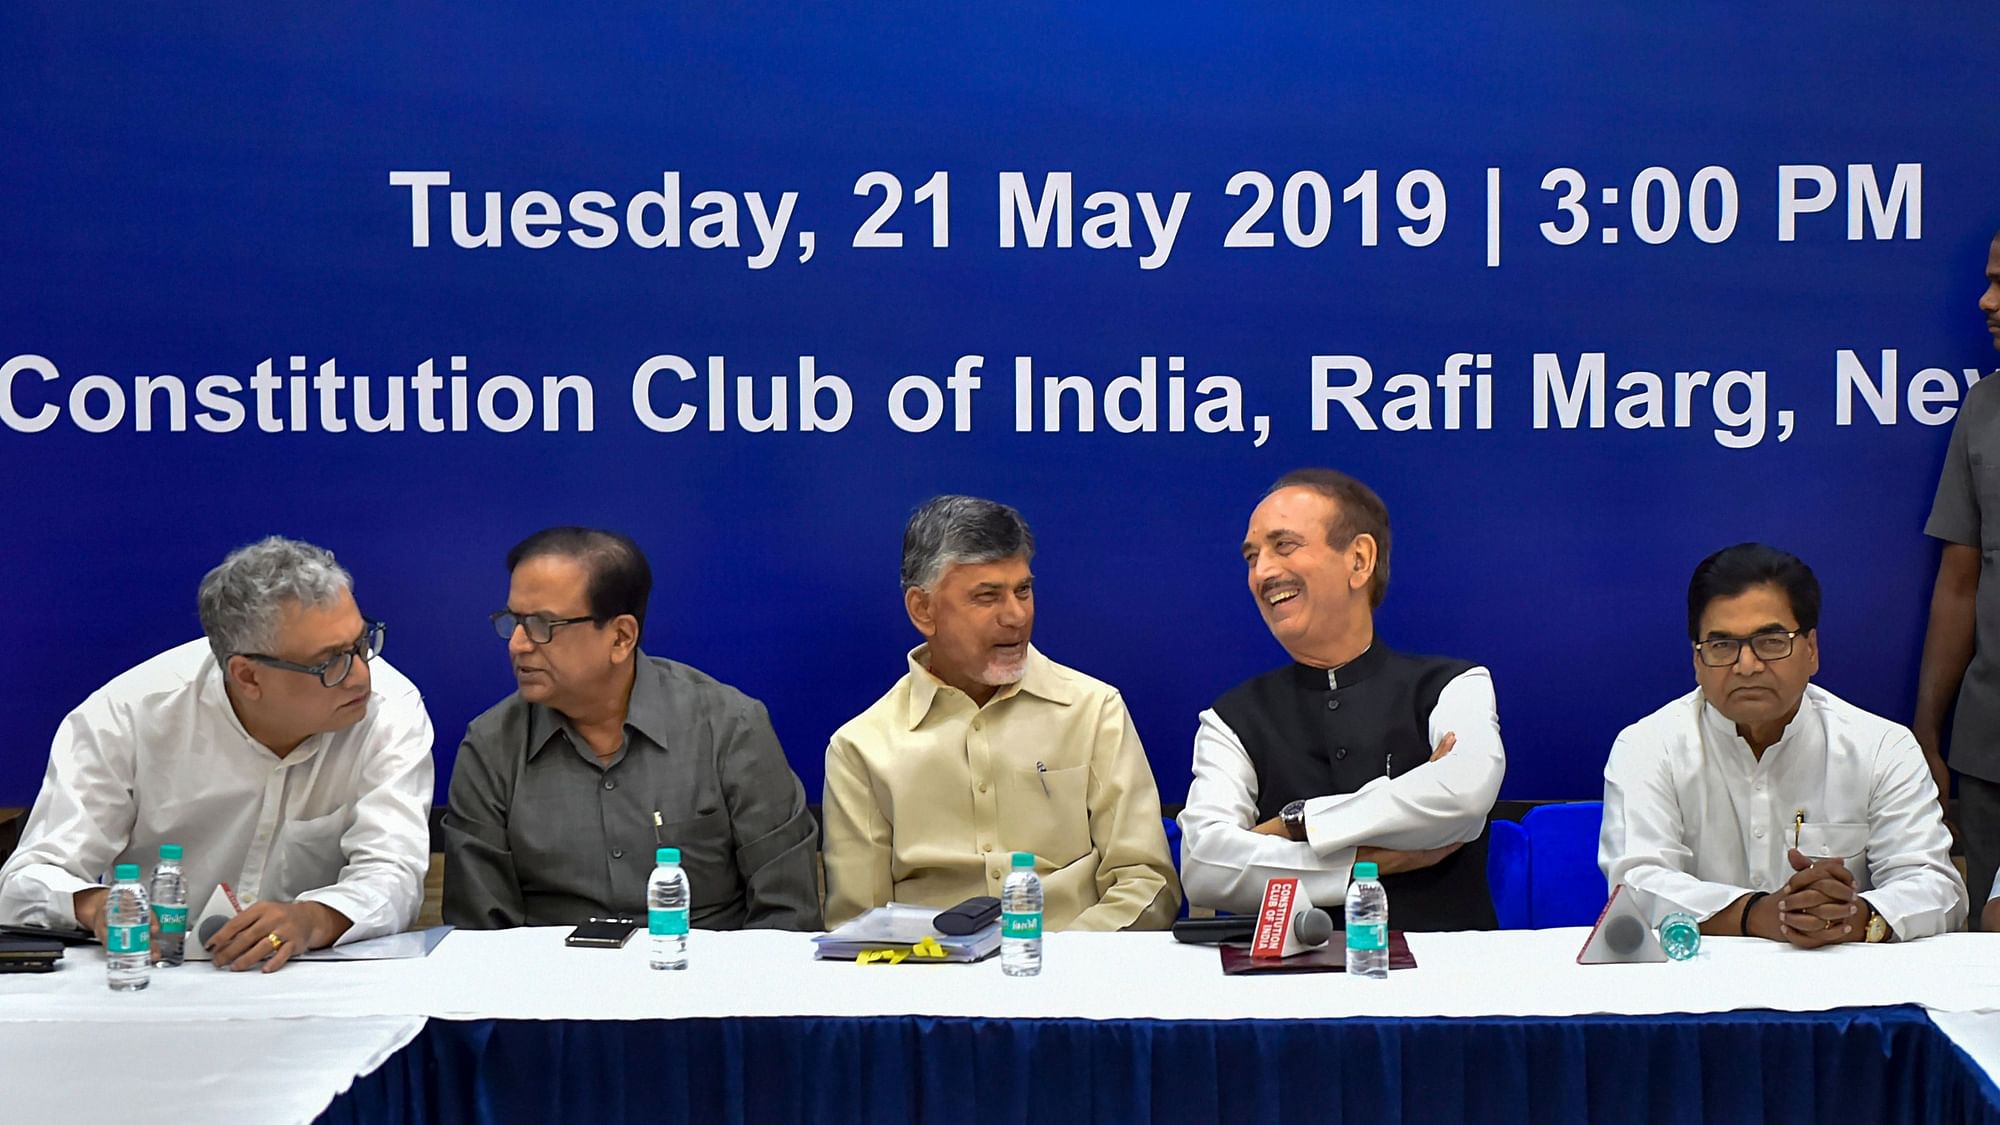  Andhra Pradesh CM N Chandrababu Naidu, Congress leader Ghulam Nabi Azad, SP leader Ramgopal Yadav, BSP leader Satish Chandra Mishra and others ahead of a meeting with EC  on Tuesday, 21 May.